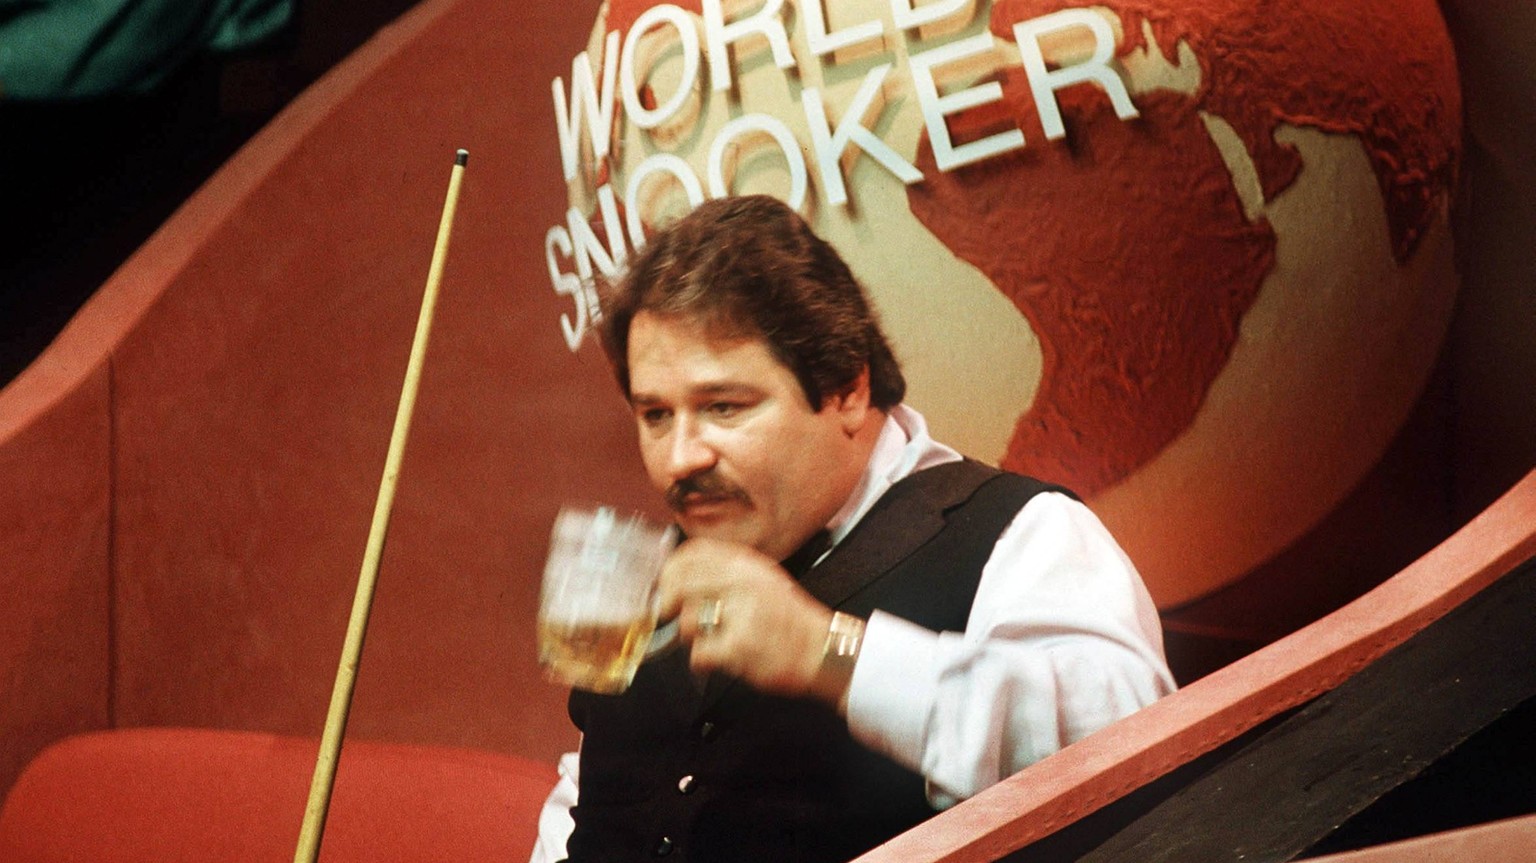 Bildnummer: 07986733 Datum: 16.04.1988 Copyright: imago/Colorsport
Snooker - Embassy World Snooker Championships 1988 Bill Werbeniuk (Canada) drinks another pint of beer during the match. Embassy Wor ...